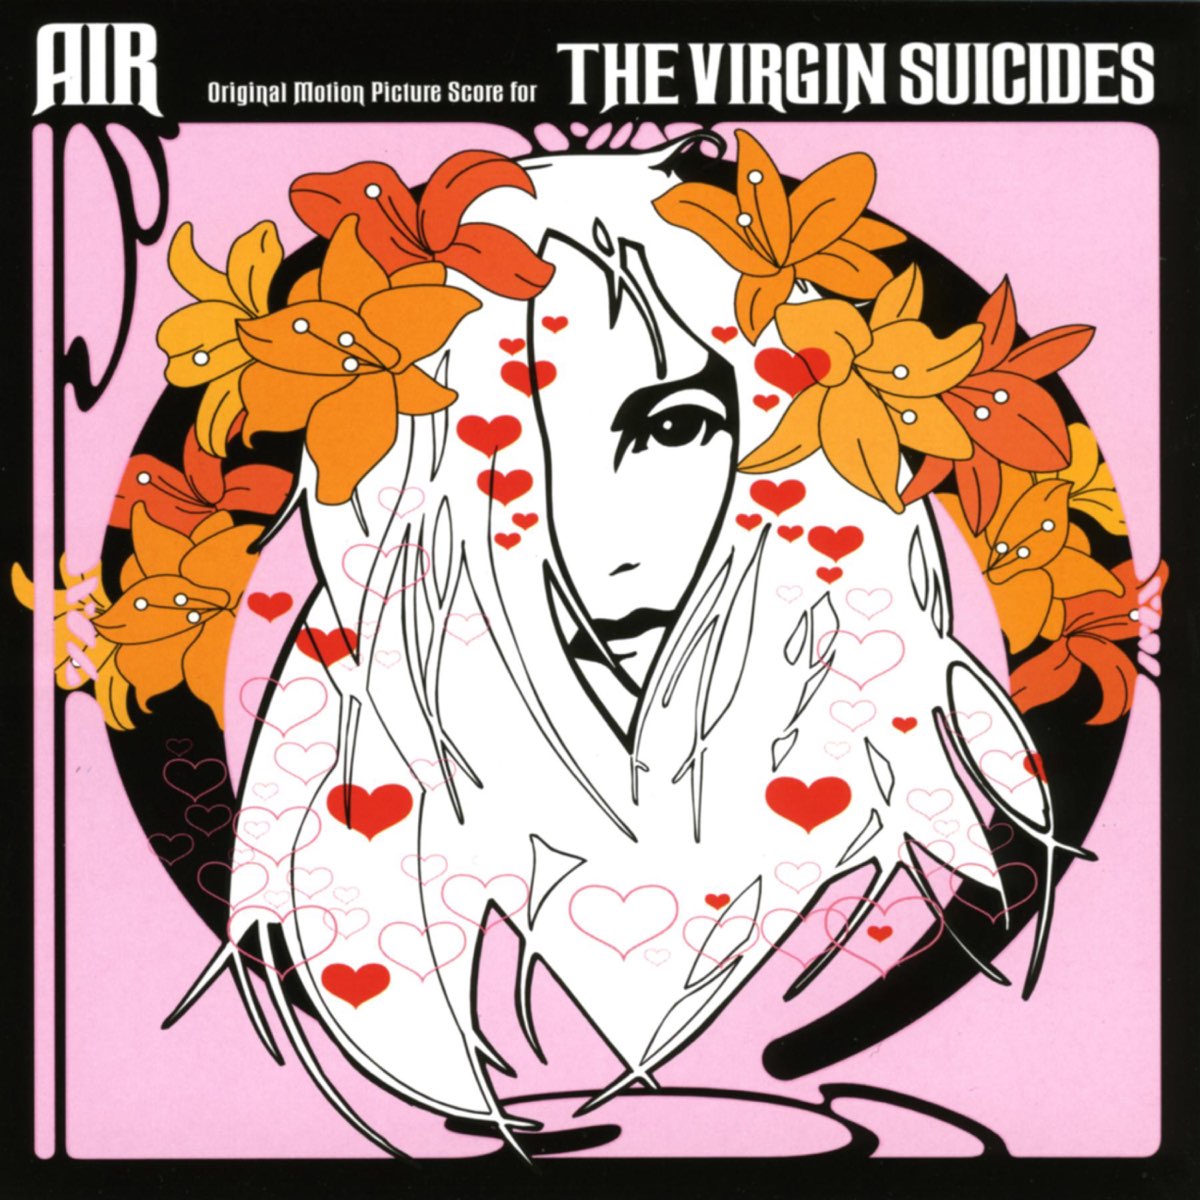 ‎the Virgin Suicides Original Motion Picture Score Album By Air Apple Music 